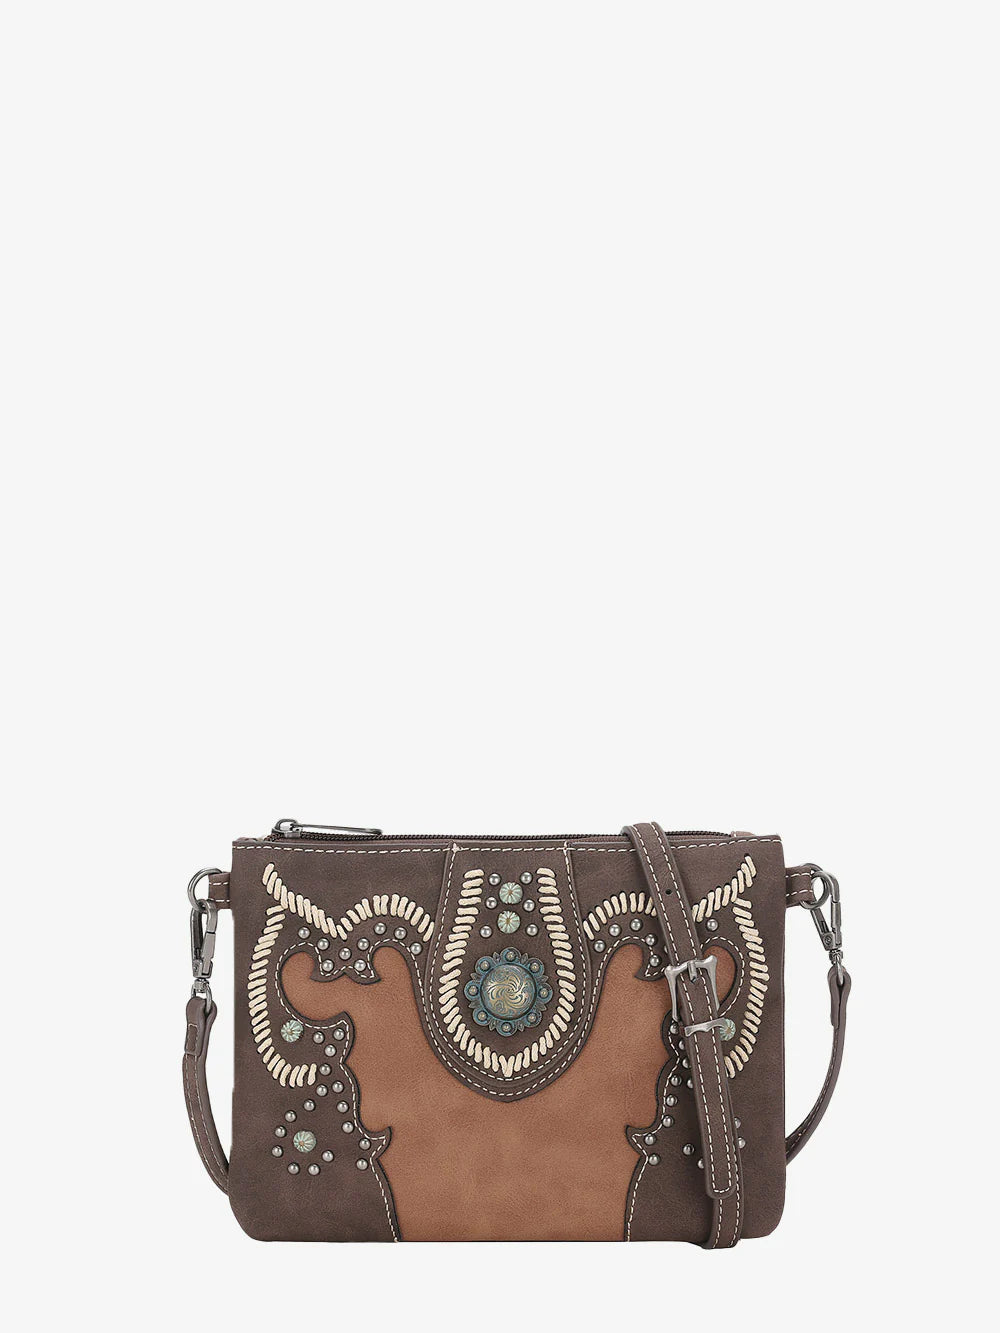 Force Ten tooled leather Dr bag, purse, handbag on eBid United States |  207192916